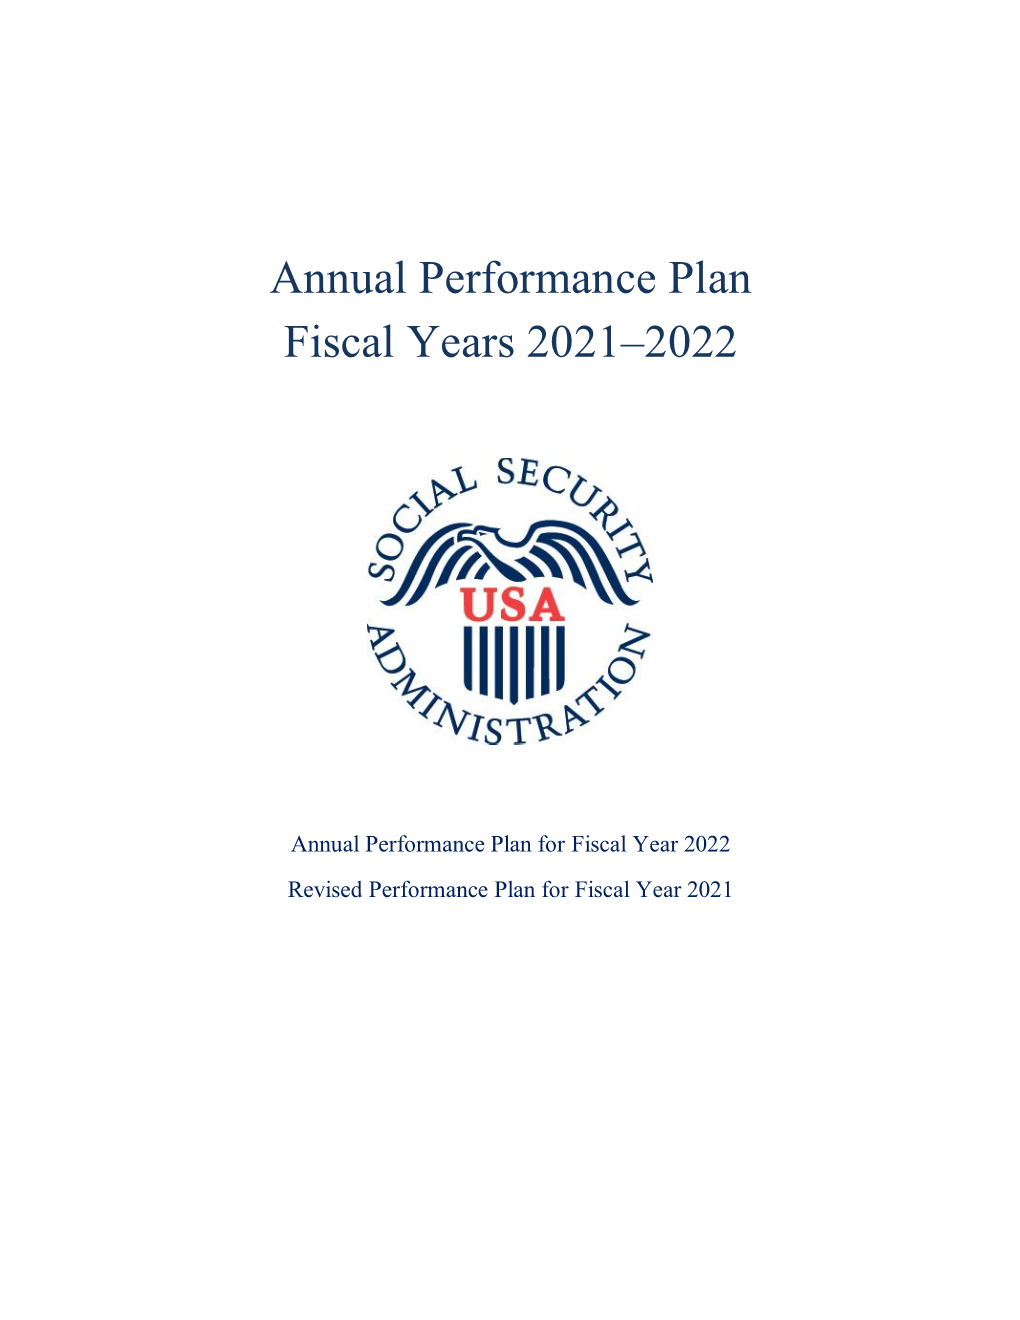 SSA Fys 2021-2022 Annual Performance Plan